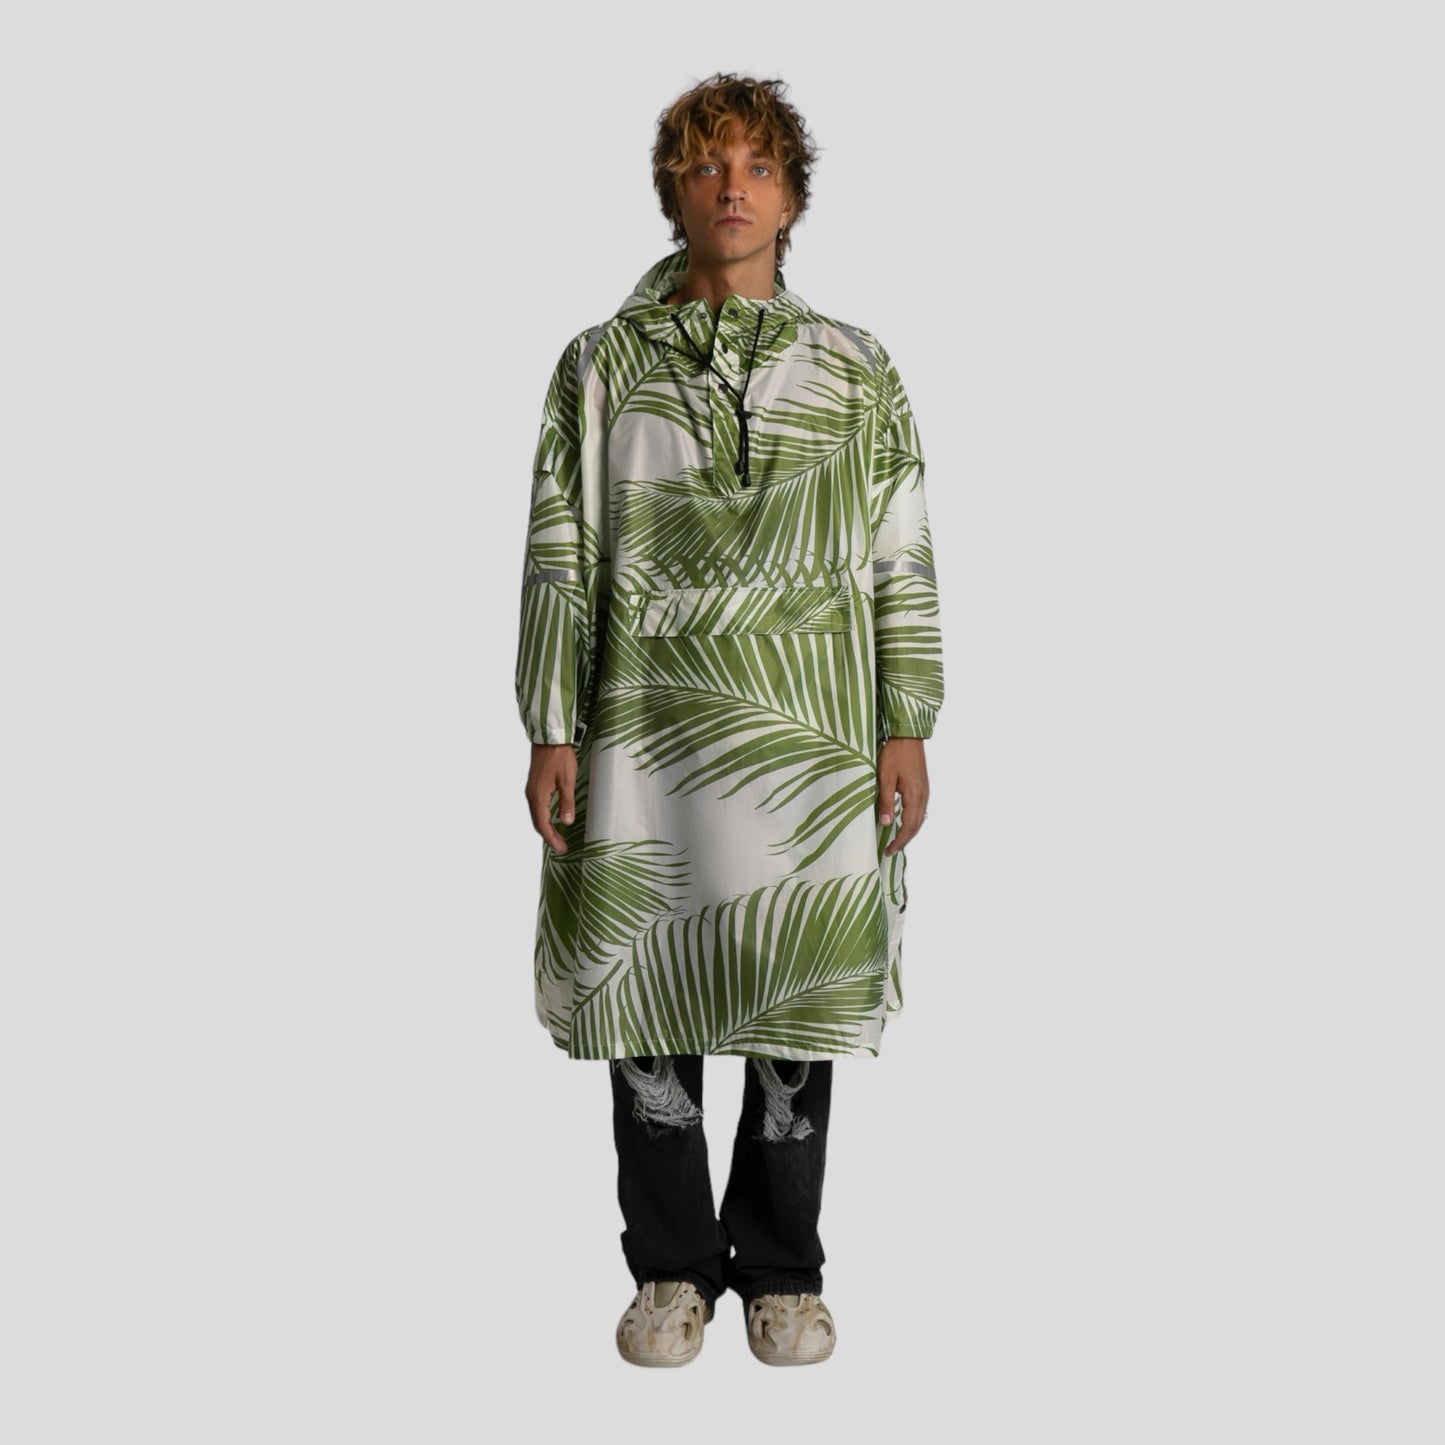 Leafy green raincoat